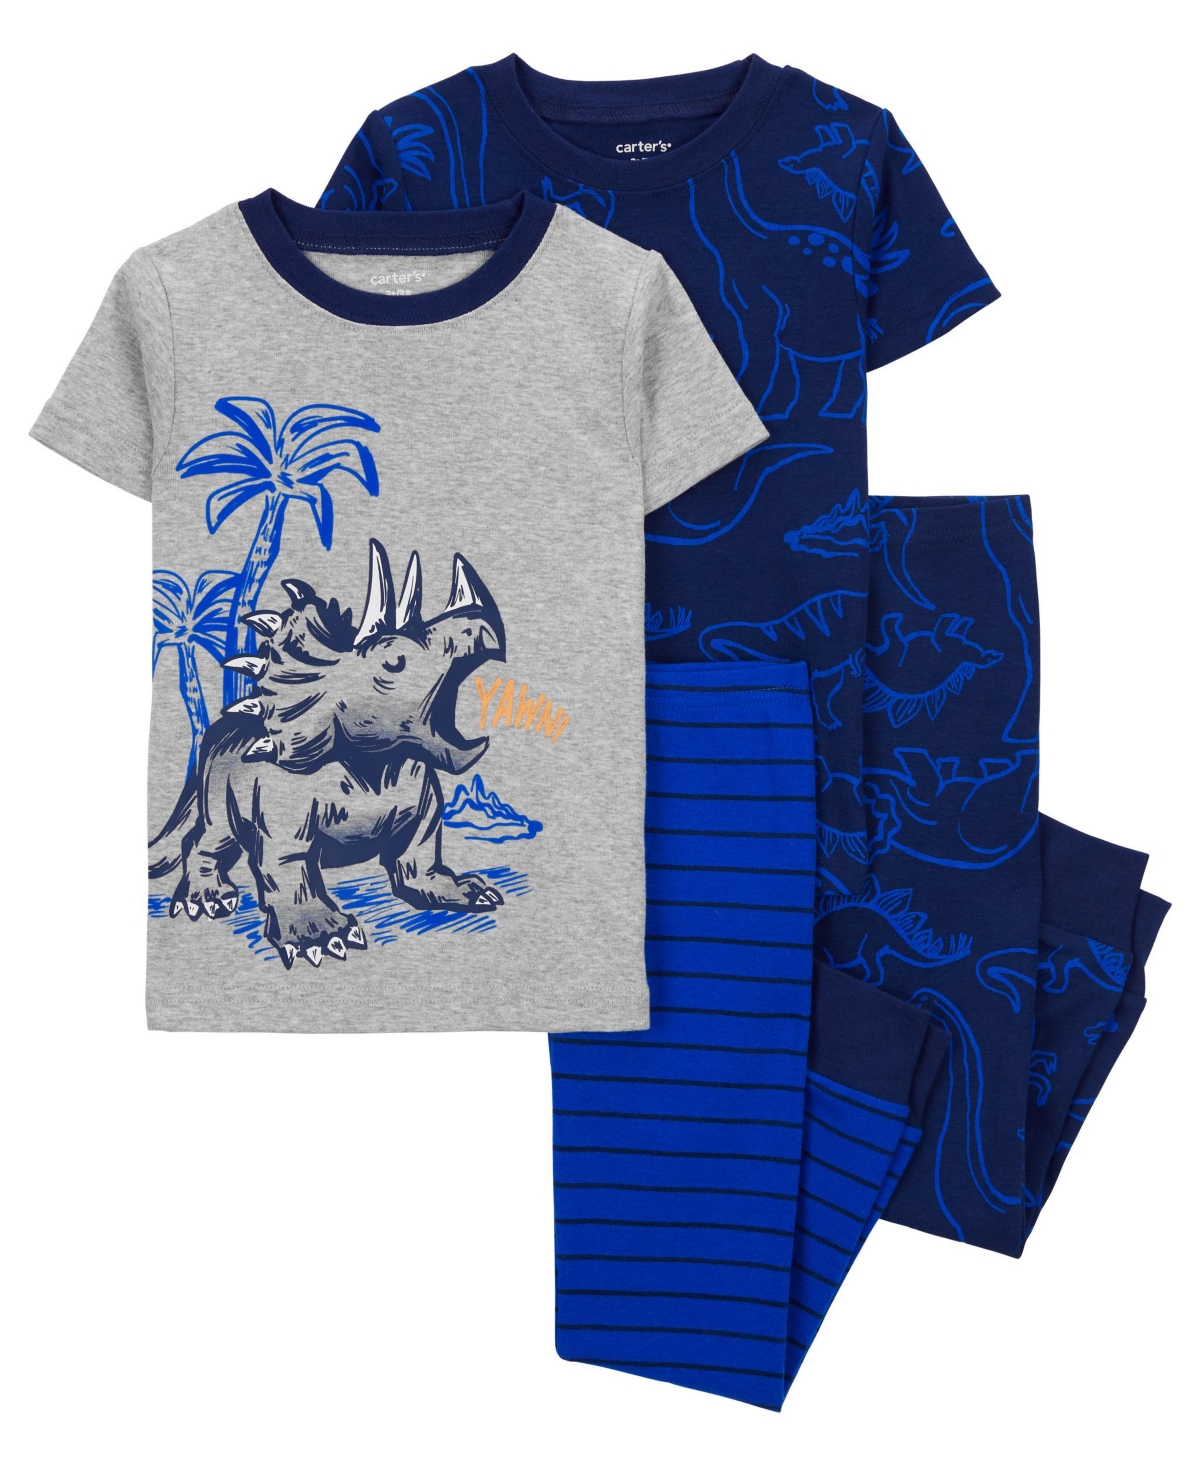 Carter's Babies' Toddler  Toddler Boys Dinosaur Cotton Blend Pajamas, 4 Piece Set In Blue